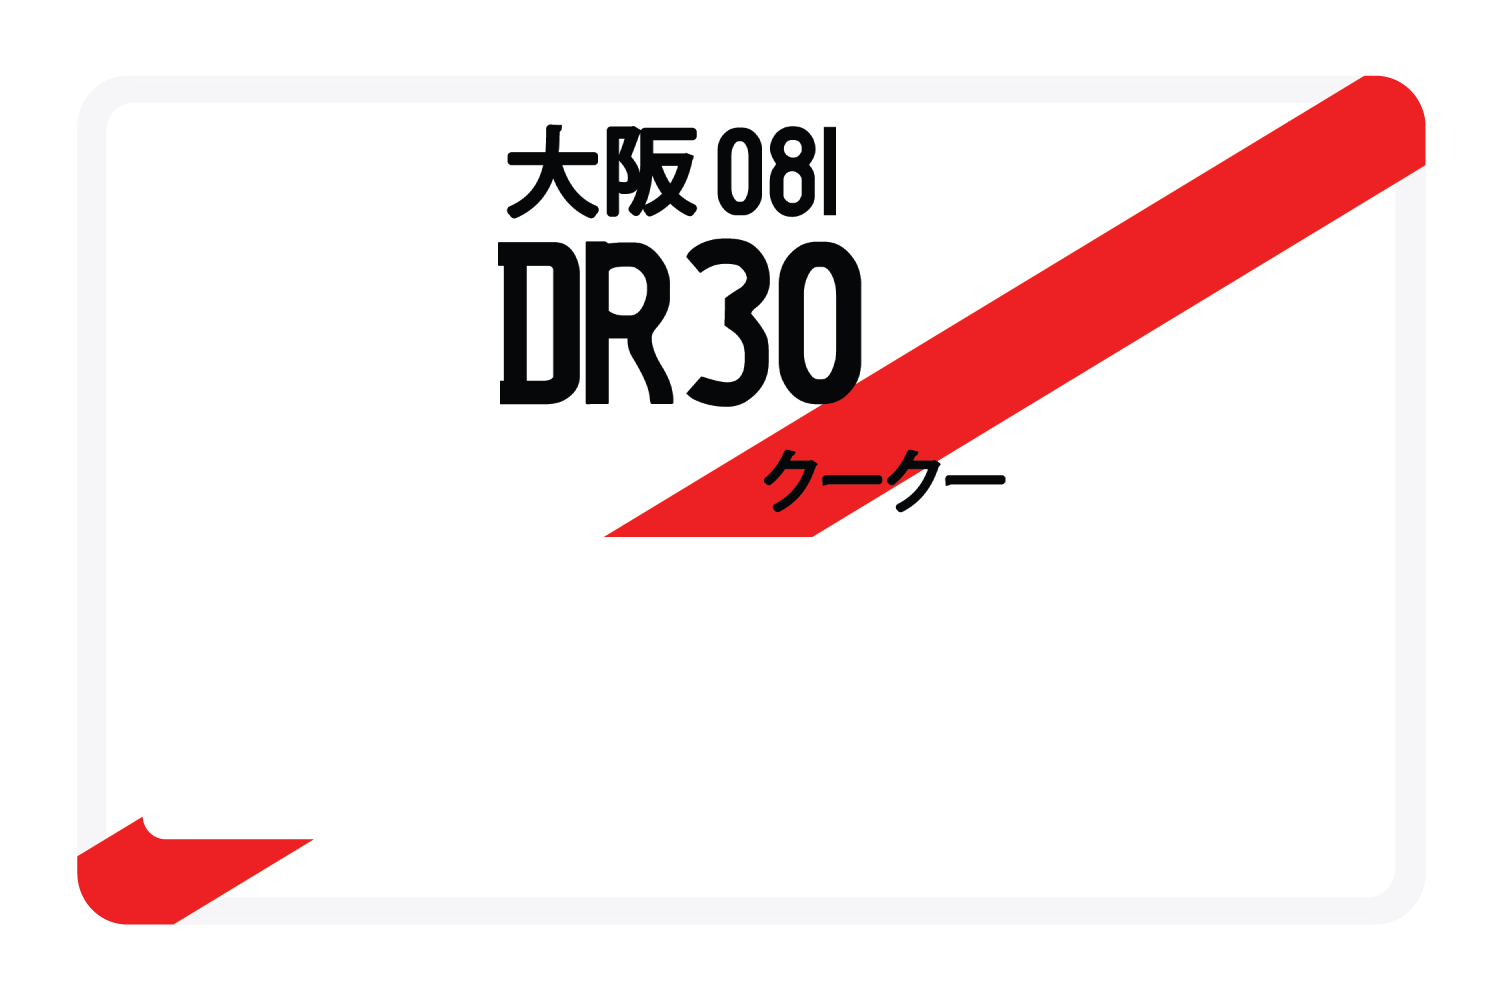 DR30